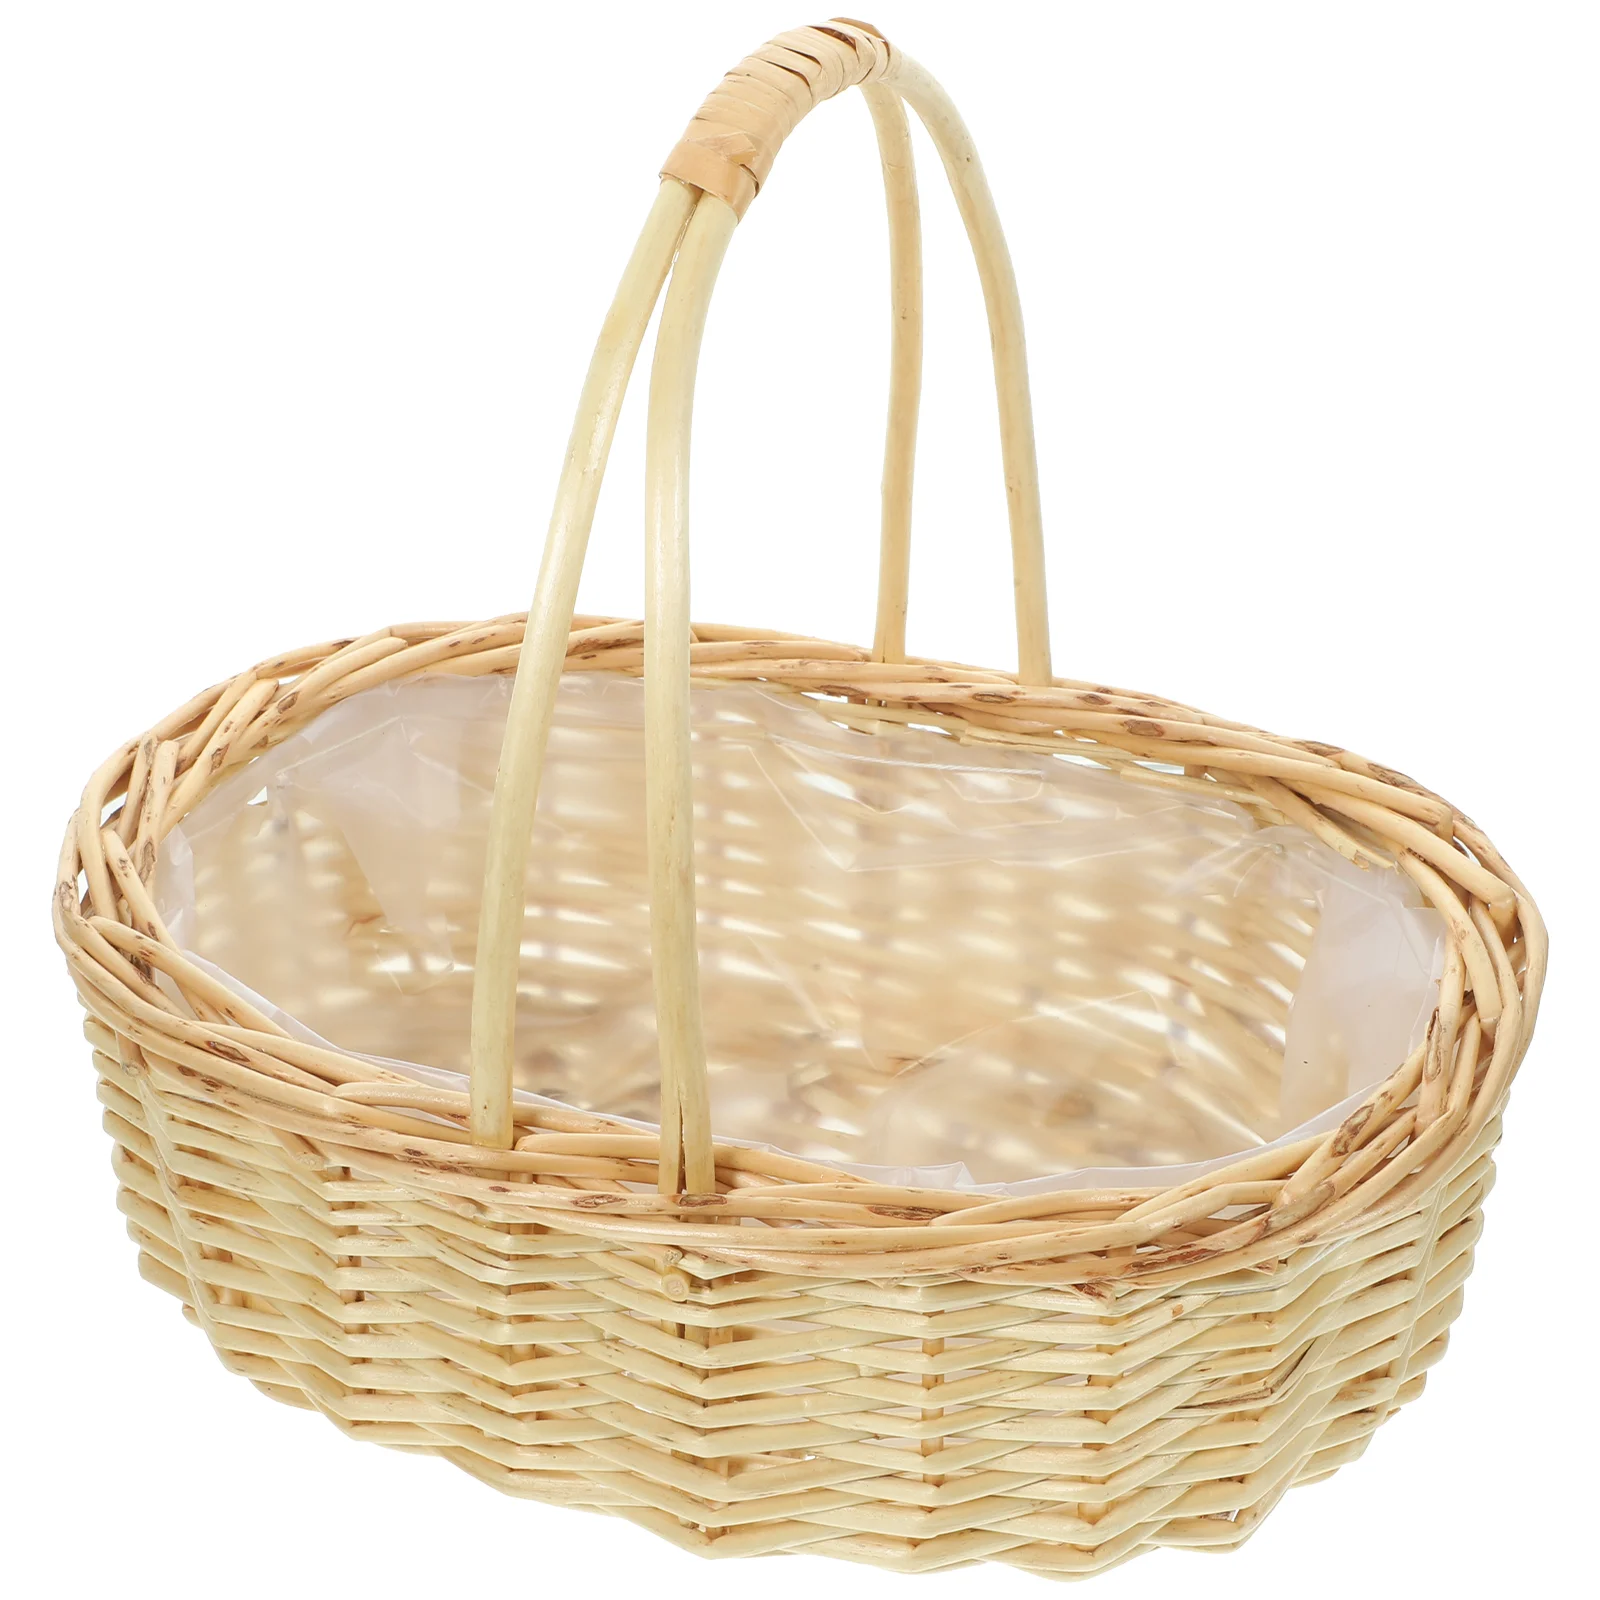 

Handmade Rattan (oval Chicken Leg Basket) Home Hamperation Picnic for Storage Decor Wicker Handheld Fruit